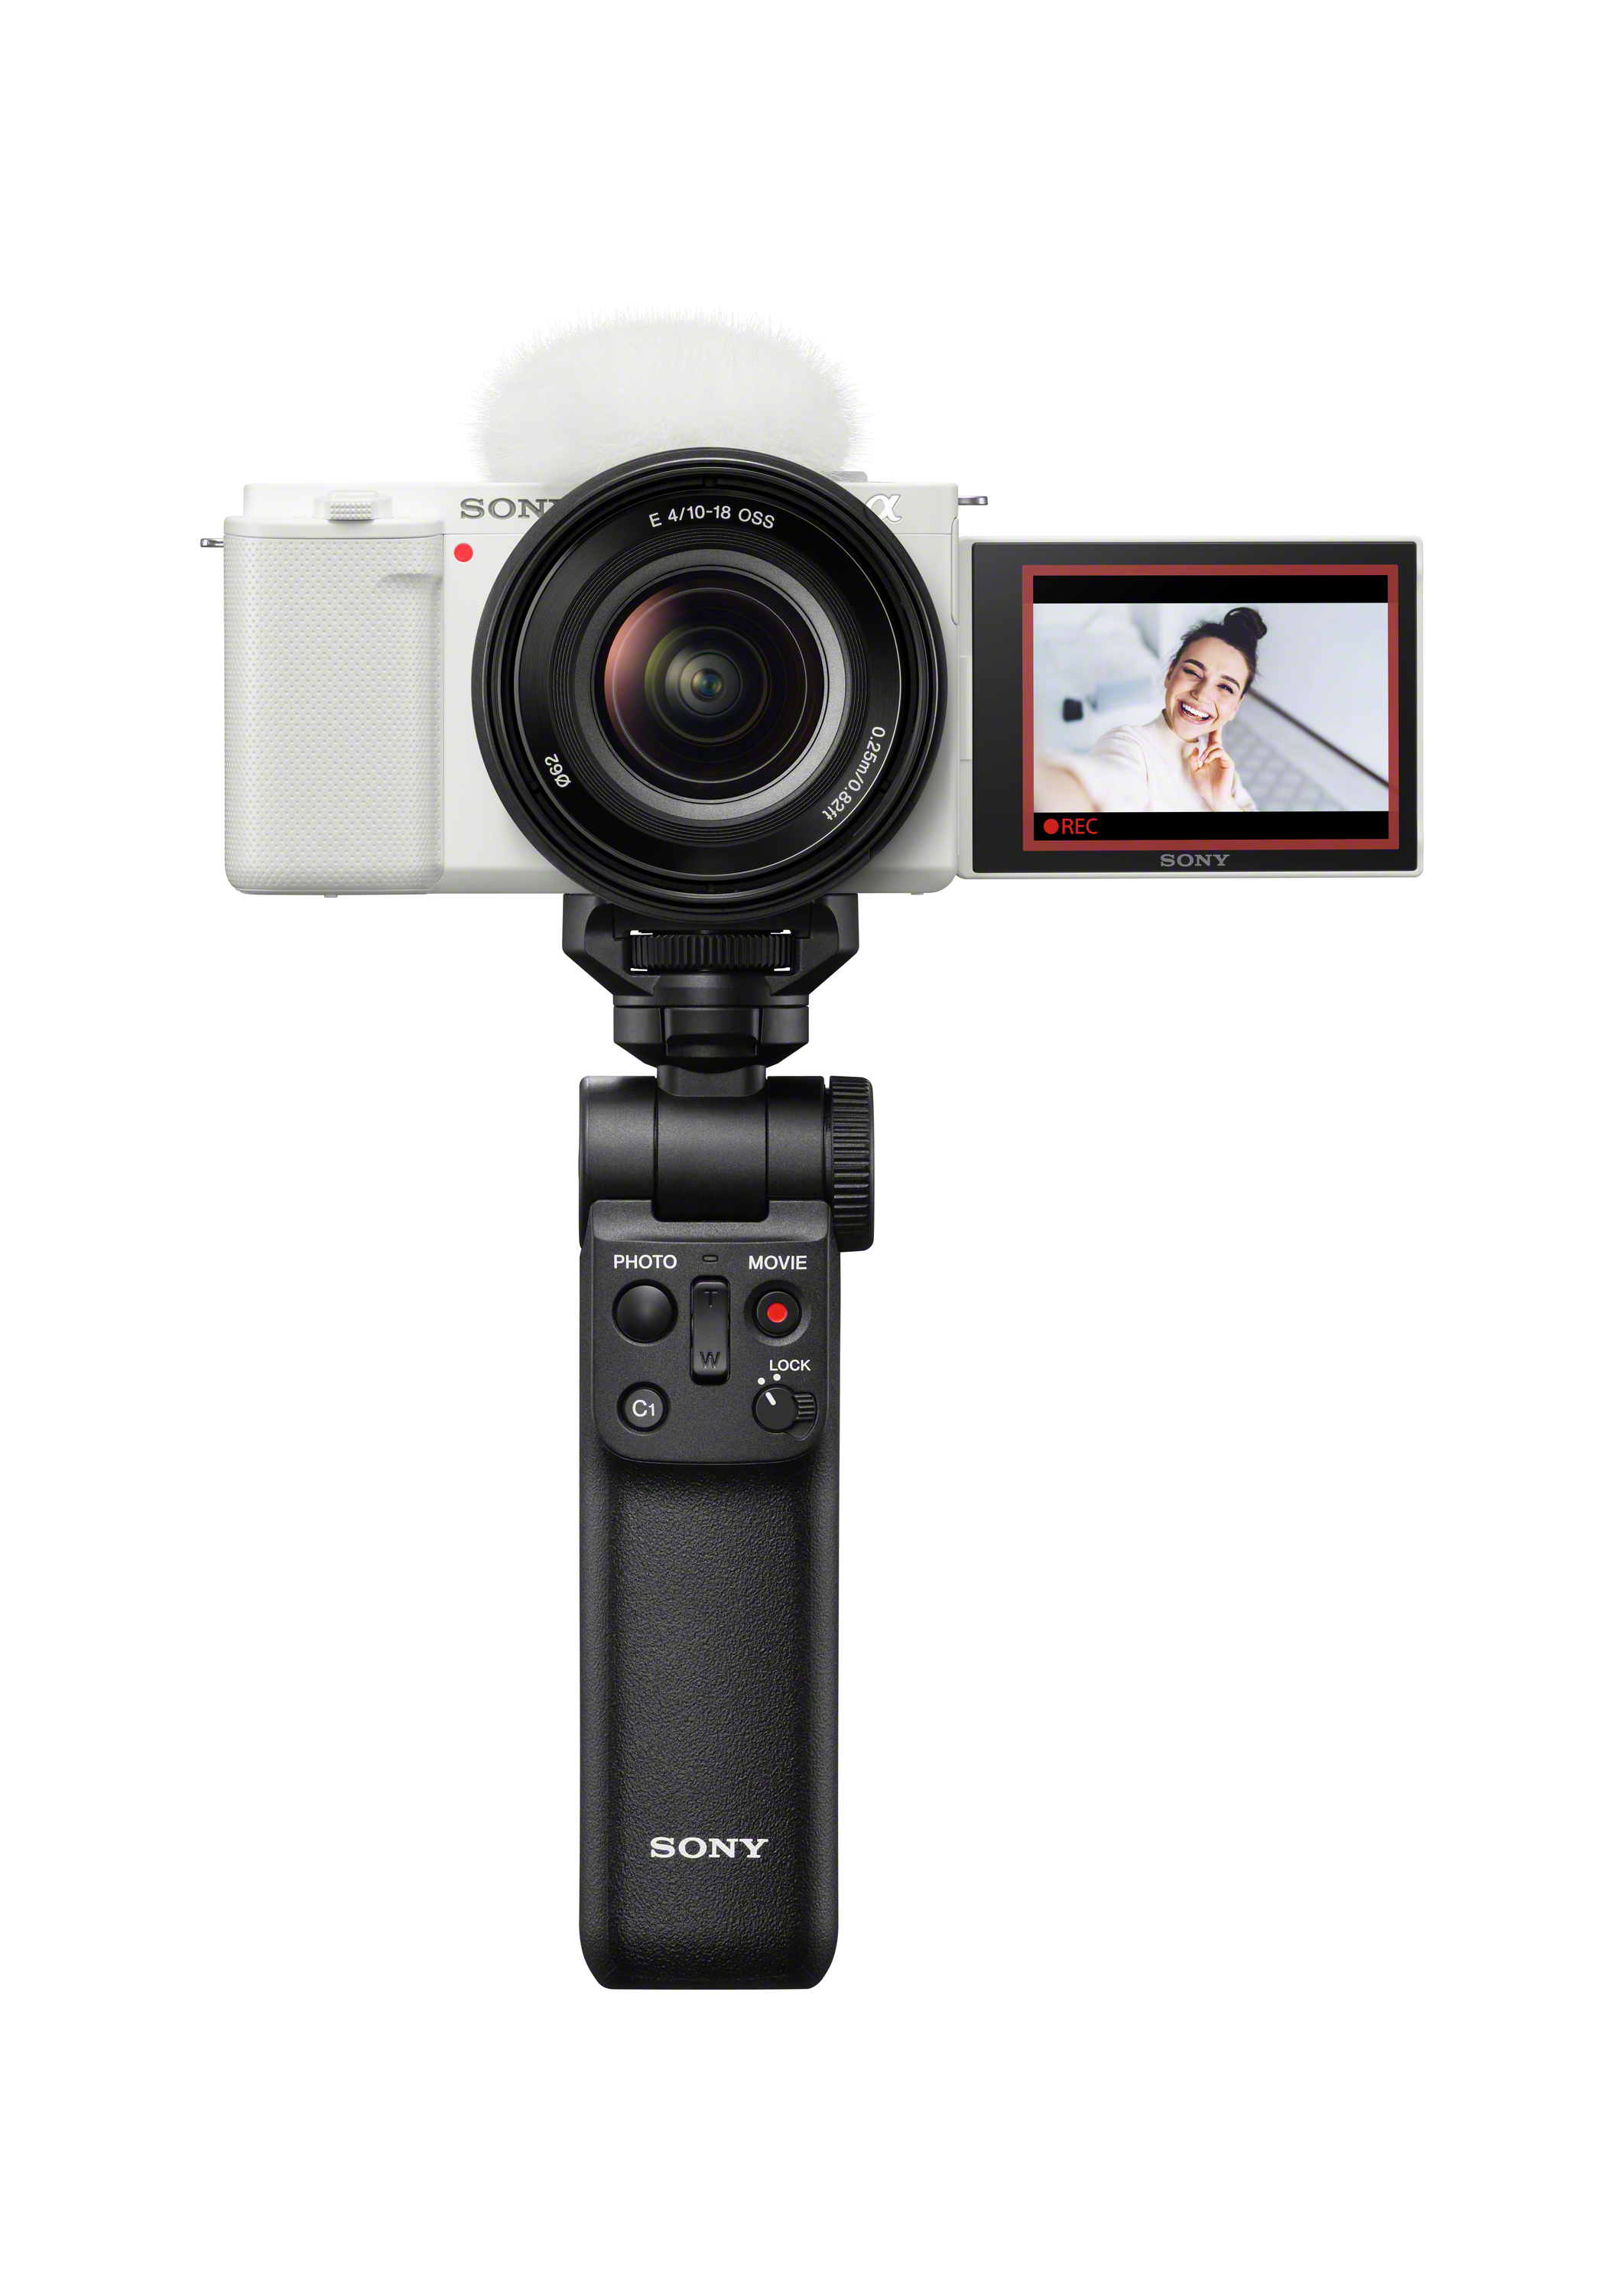 Cámara digital con lente intercambiable para vloggers